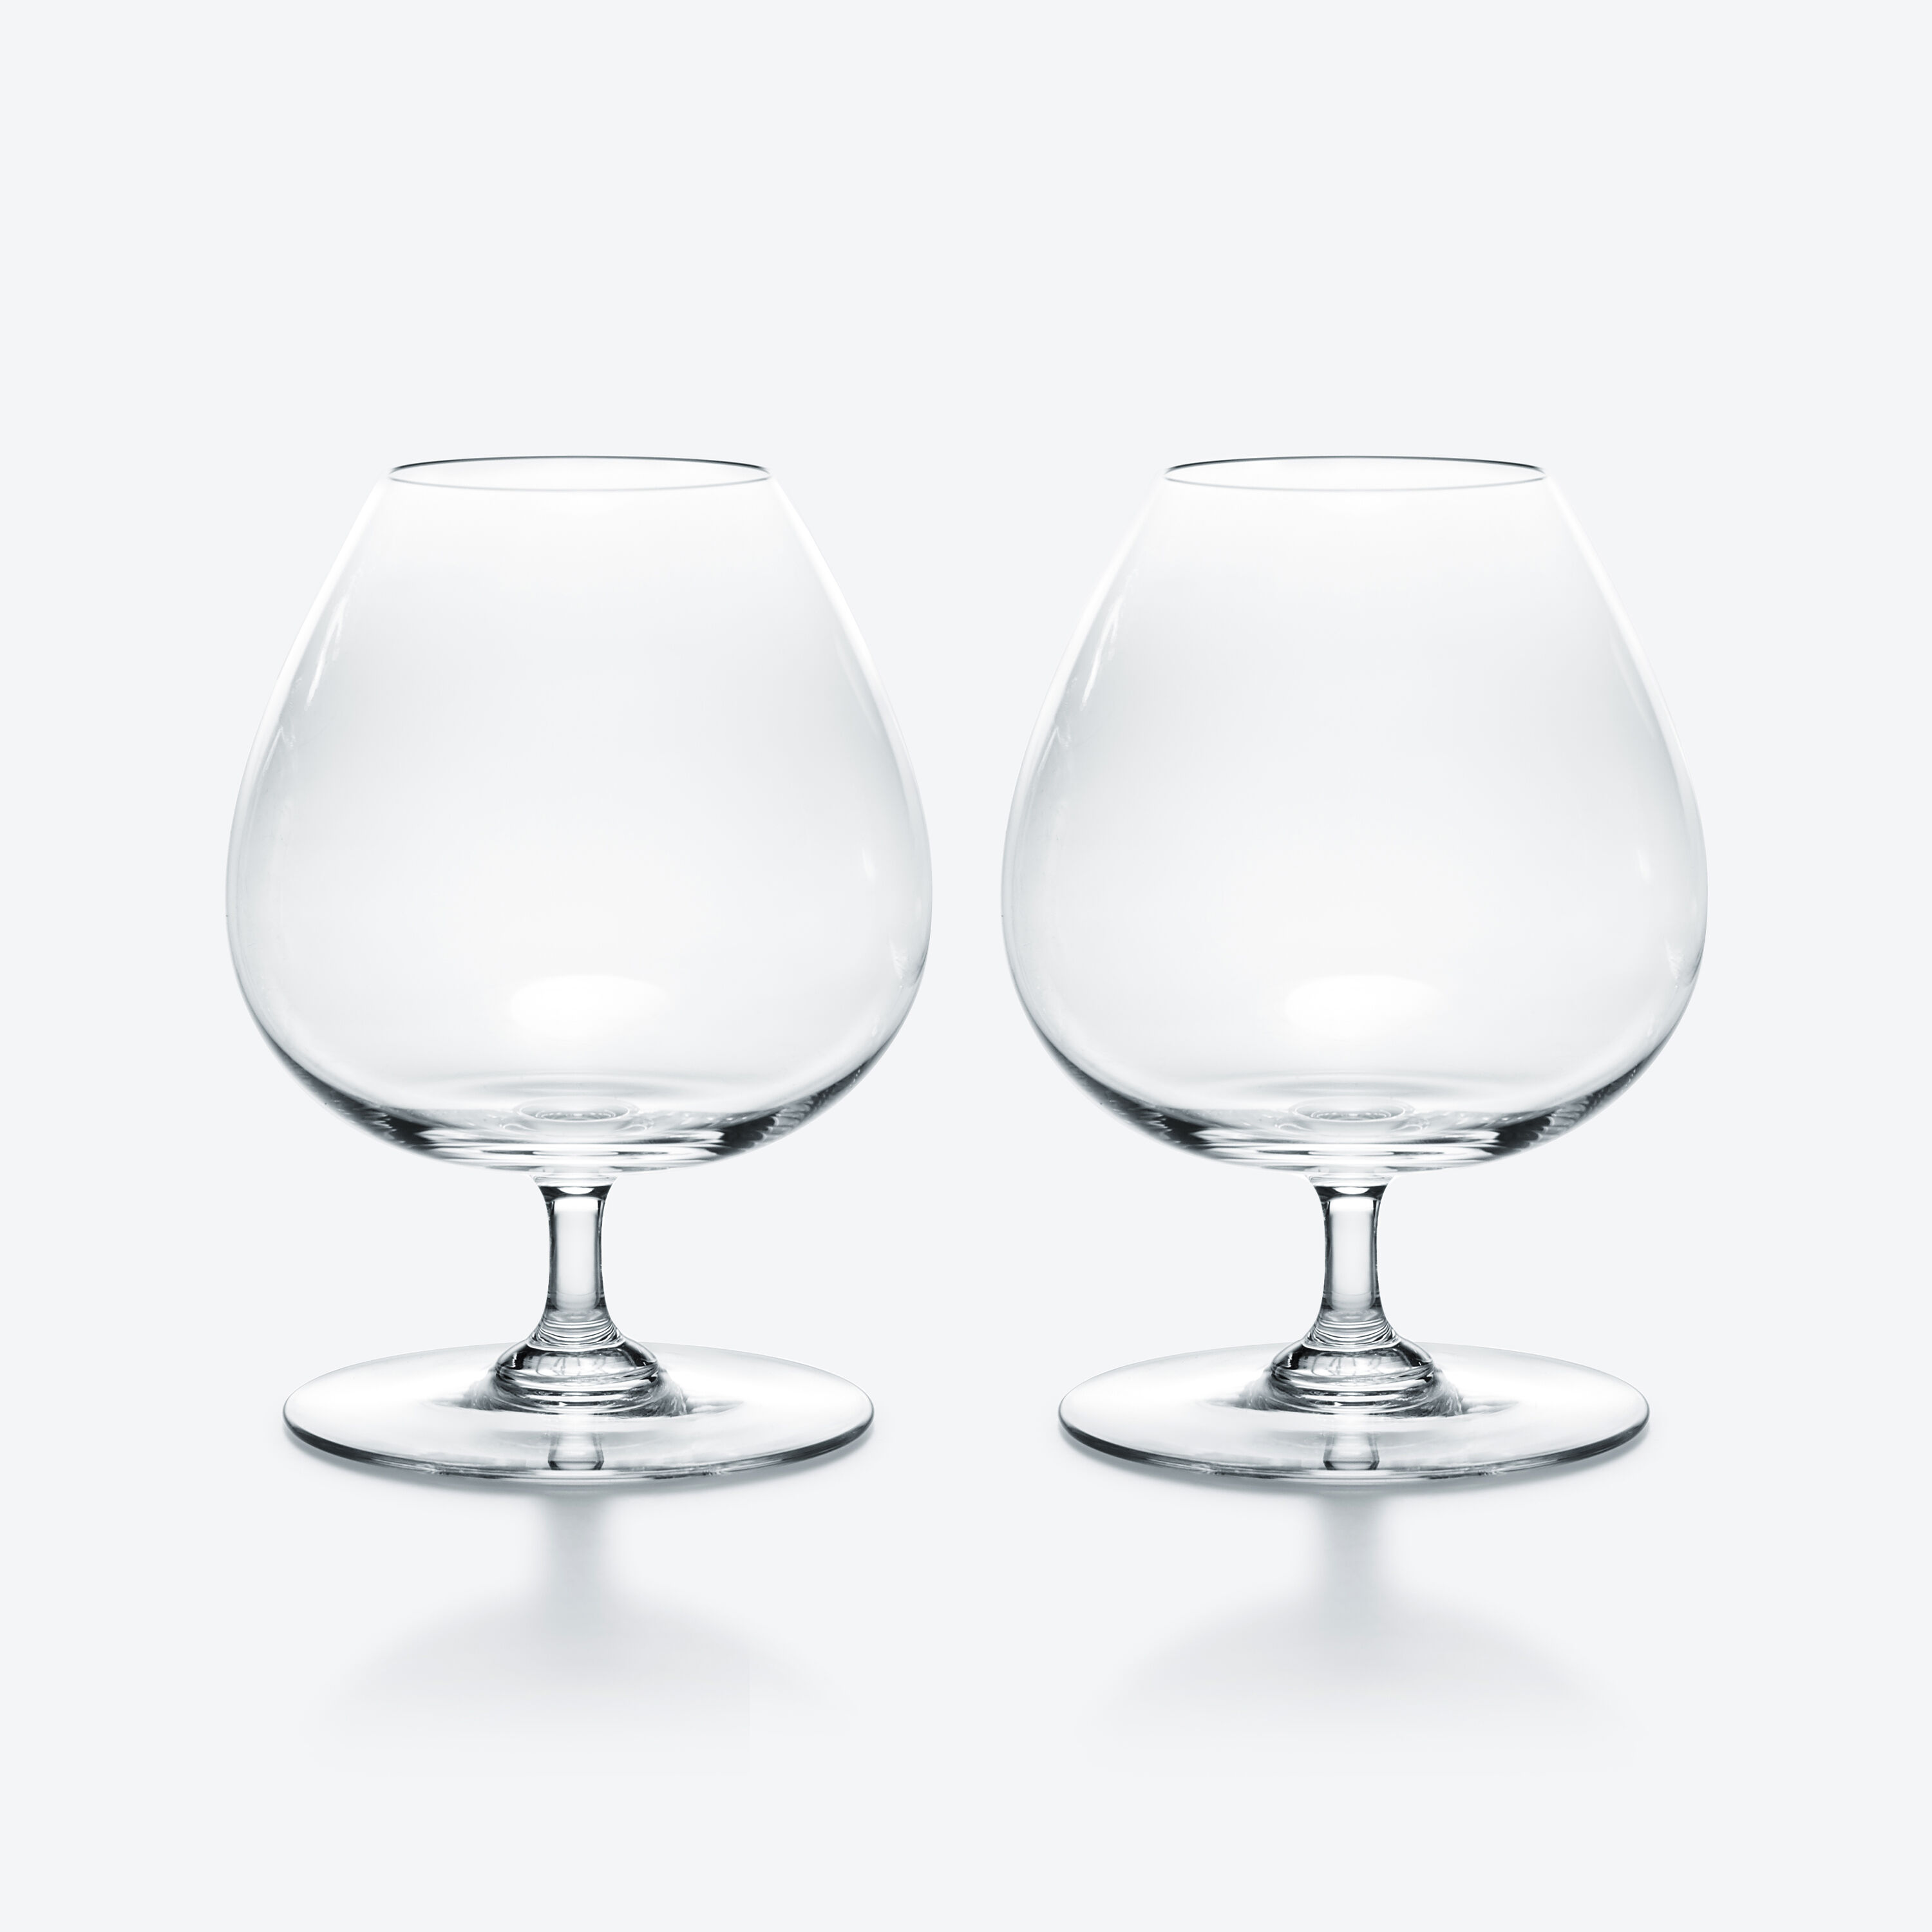 Cognac Degustation Glasses | Baccarat International